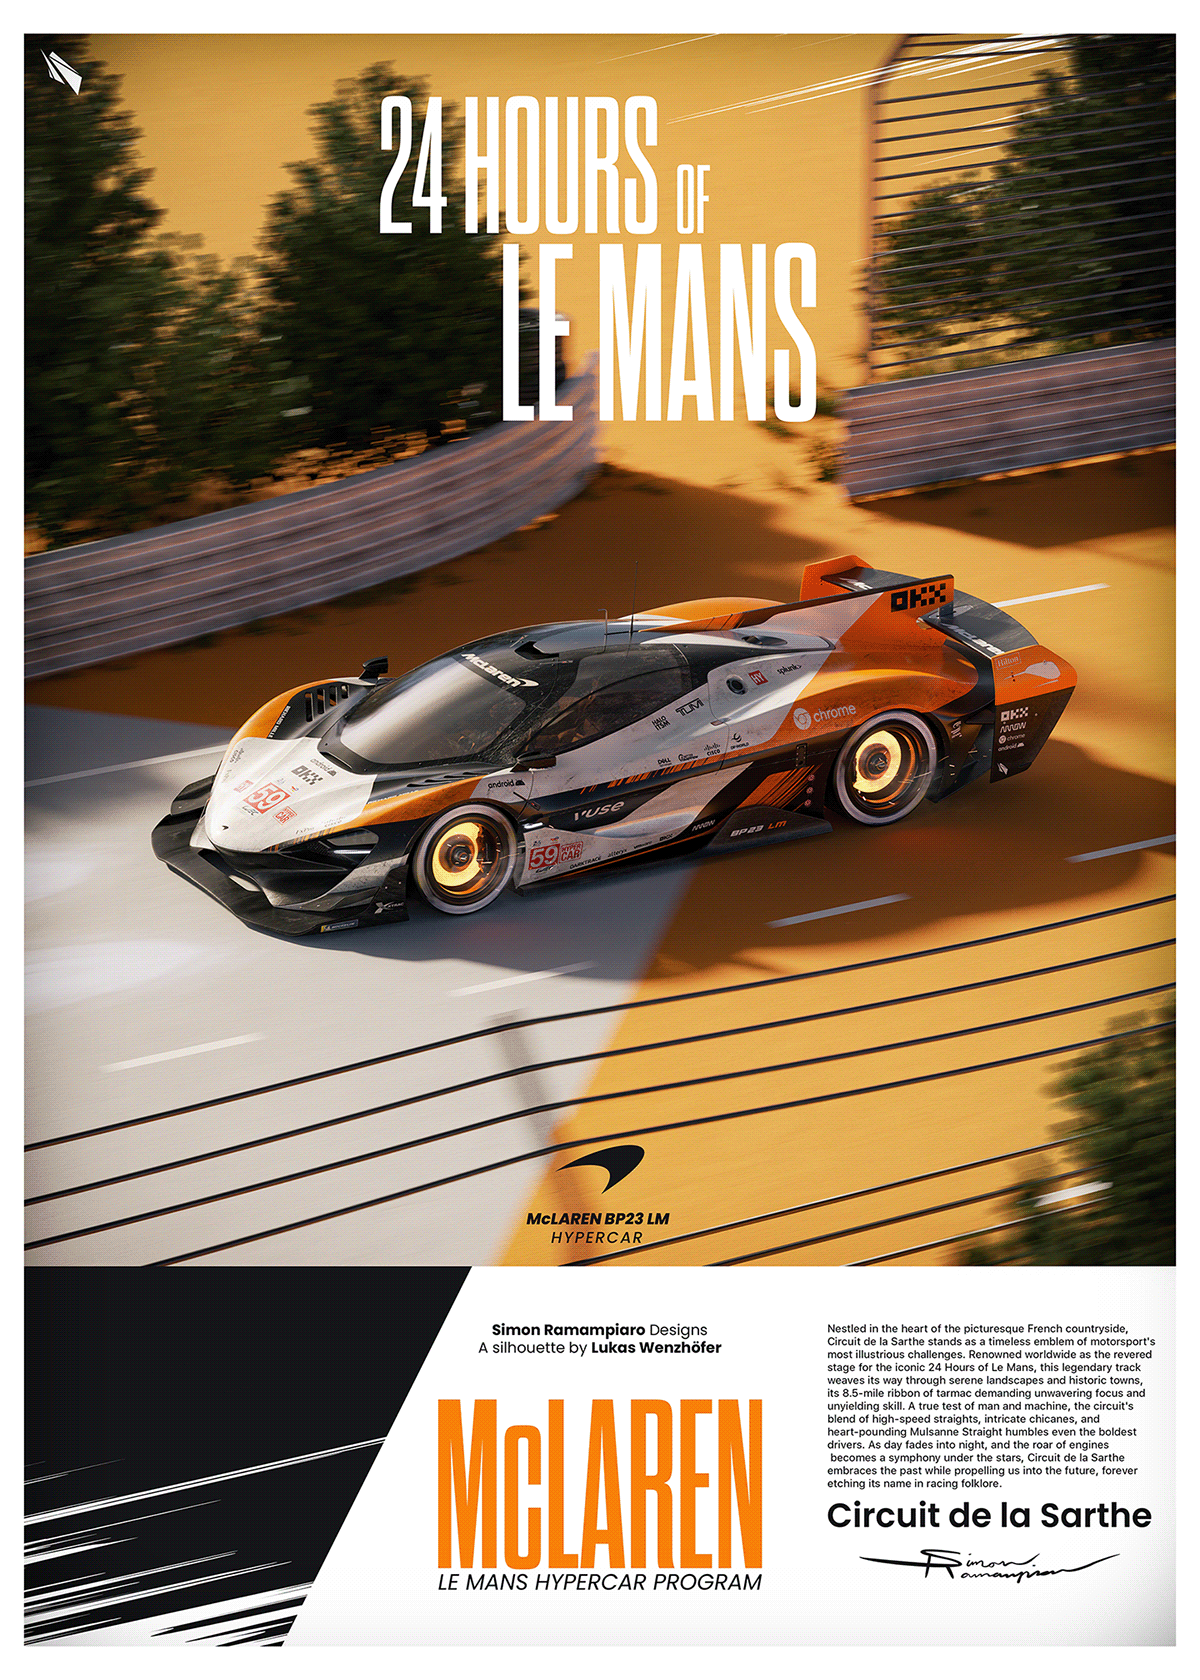 livery design art direction  McLaren le mans hypercar Racing Vehicle race automtive f1